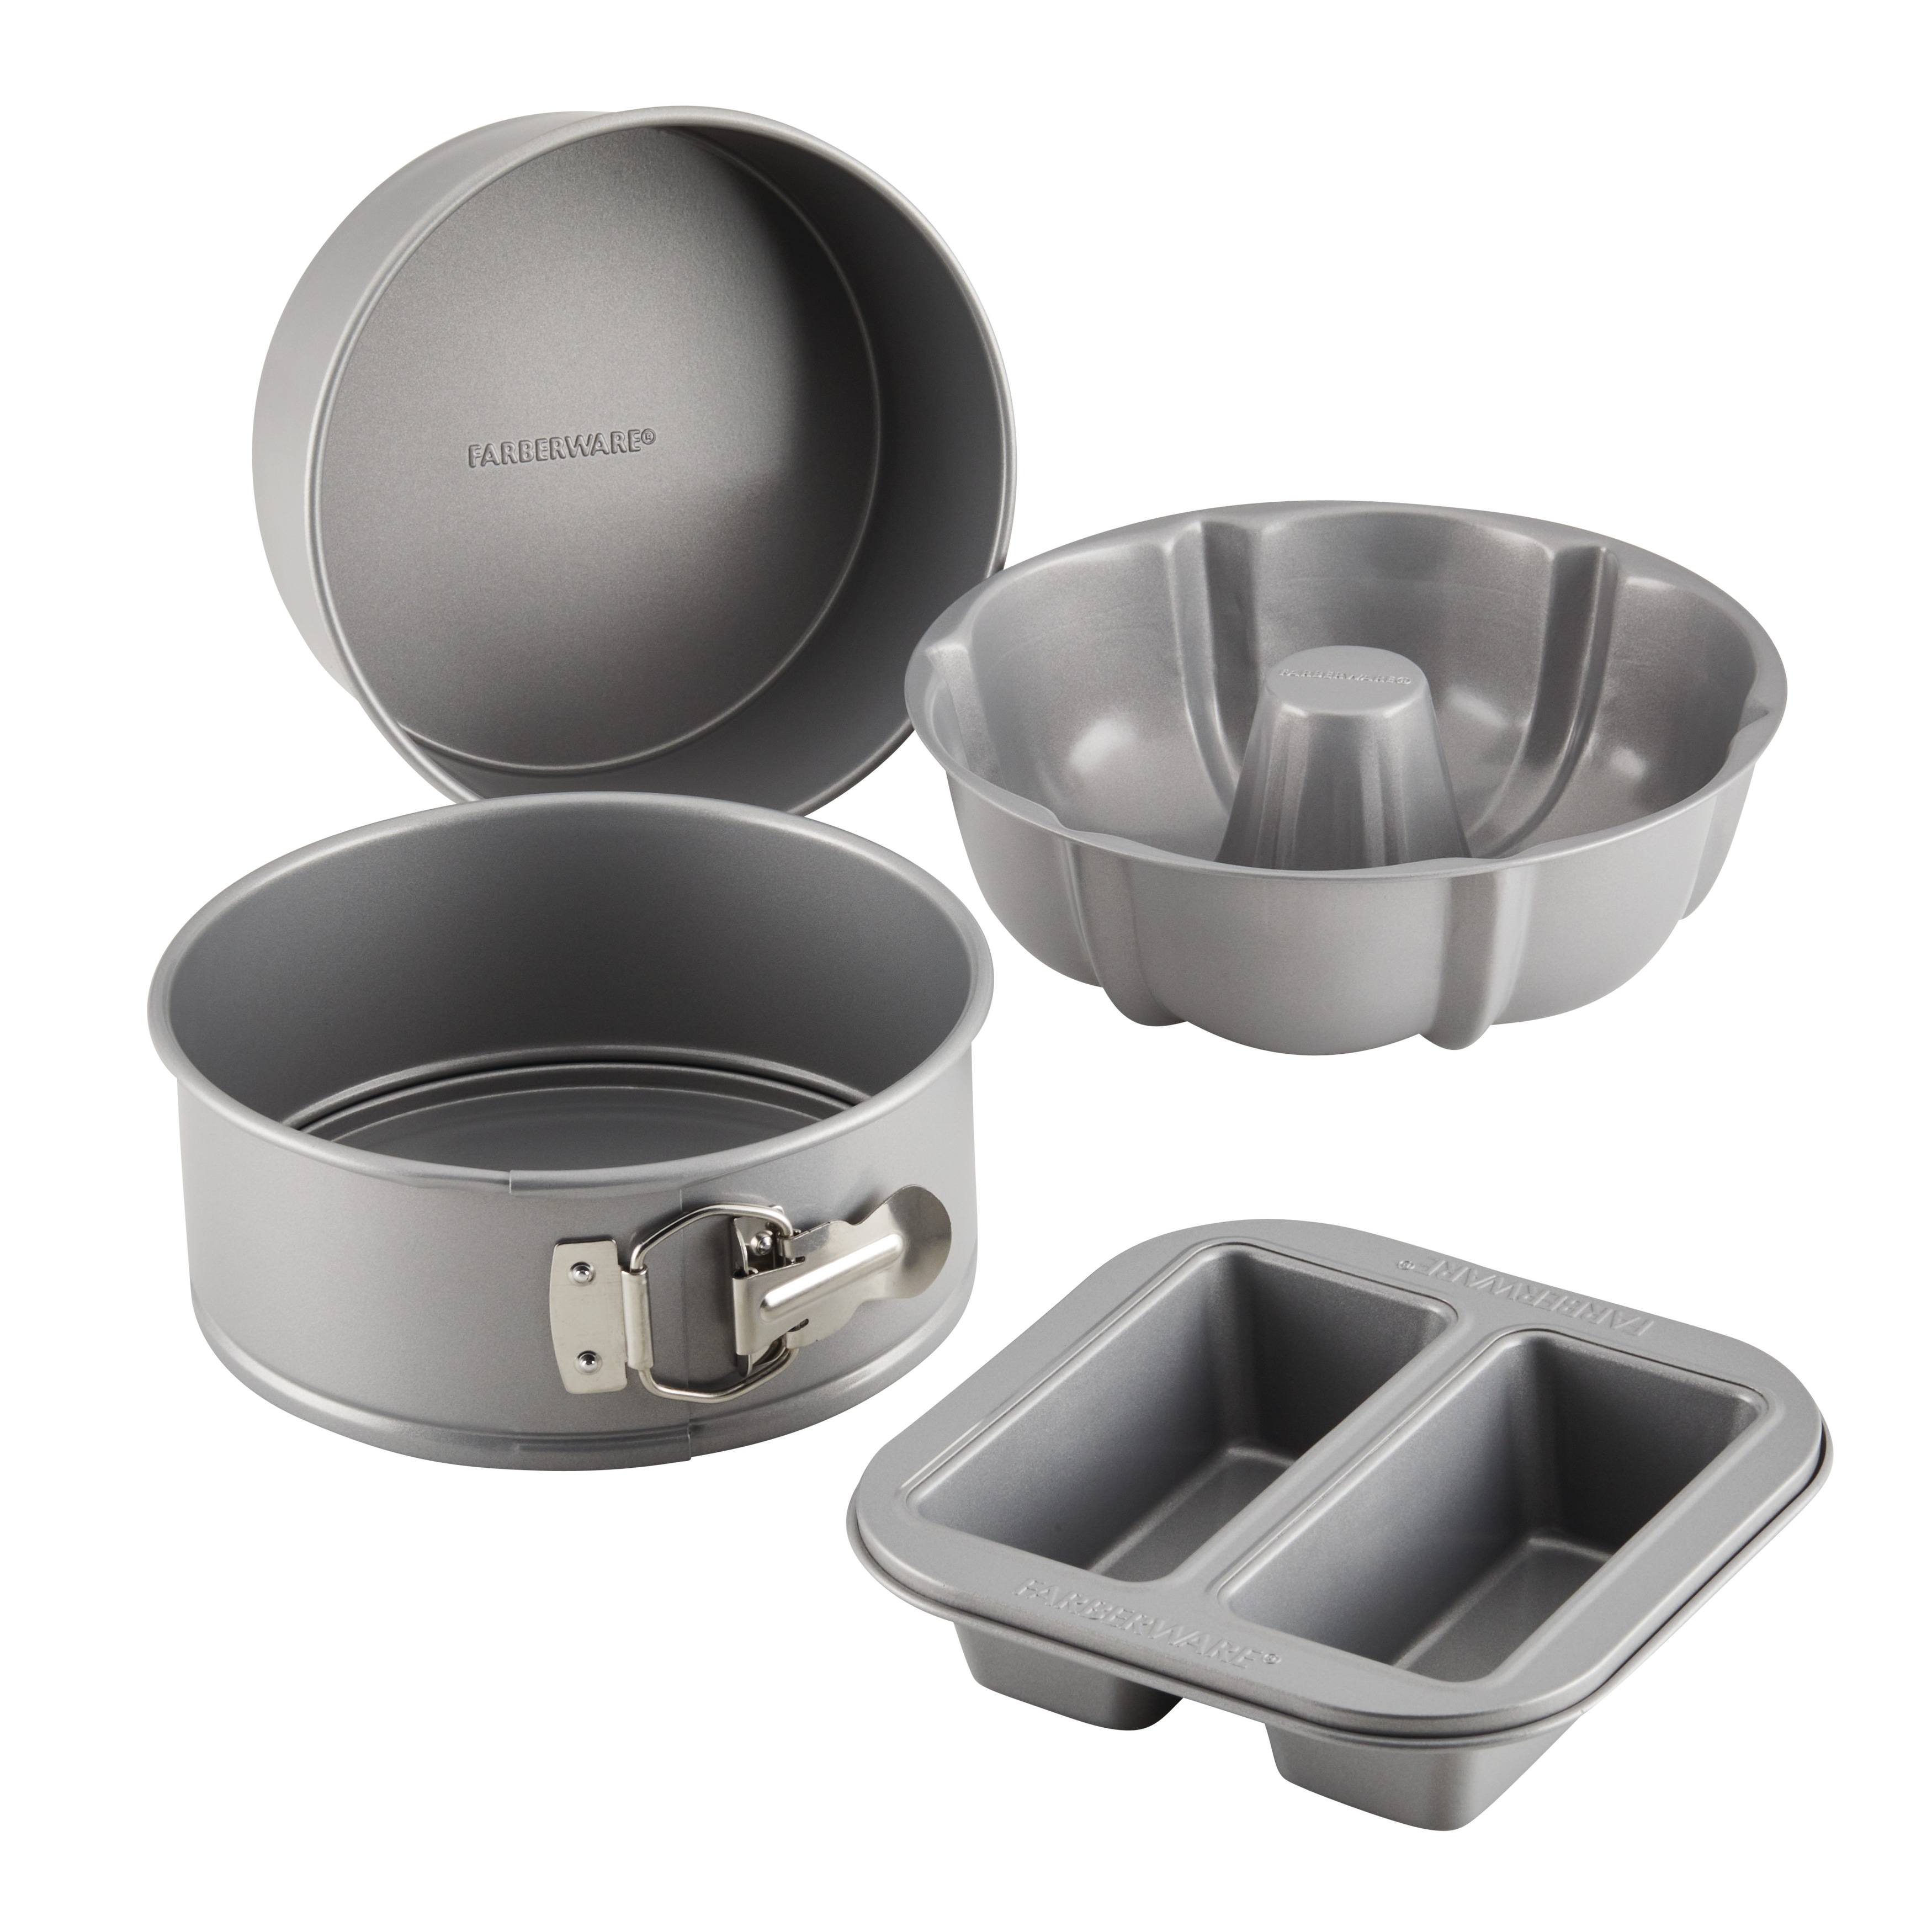 Farberware Nonstick Bakeware 9-inch Grey Round Springform Pan